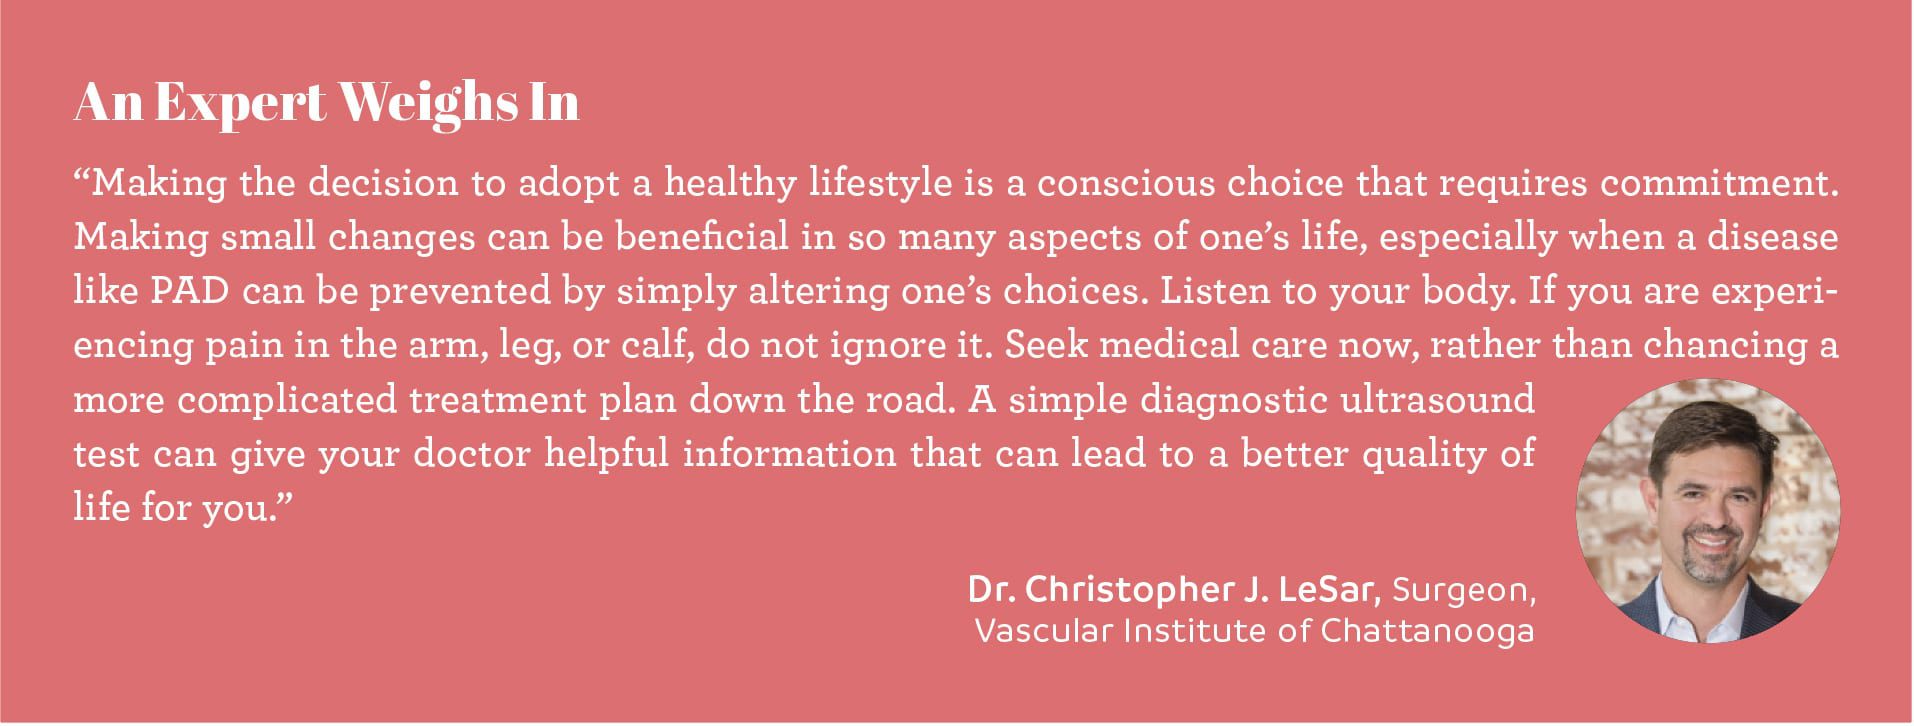 expert opinion chattanooga doctor christopher j lesar surgeon vascular institute chattanooga vascular health